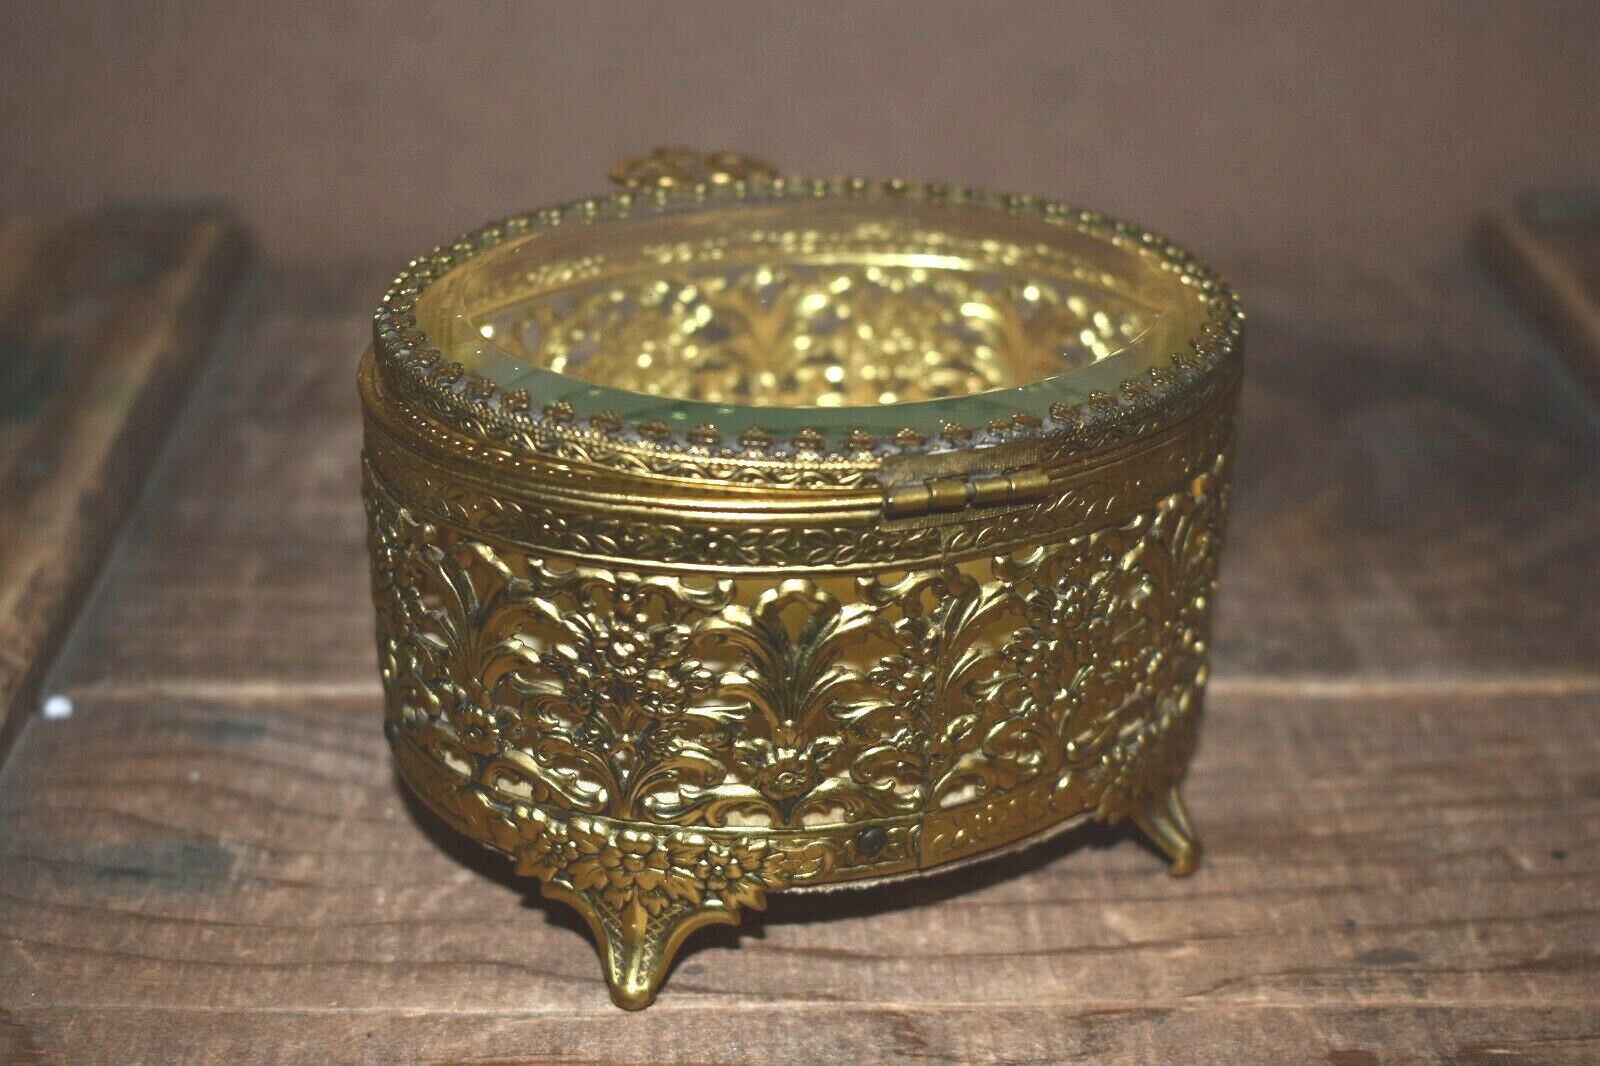 Matson Gold Ormolu Vintage Jewelry Case - Globe 24 Karat Gold Plated | eBay